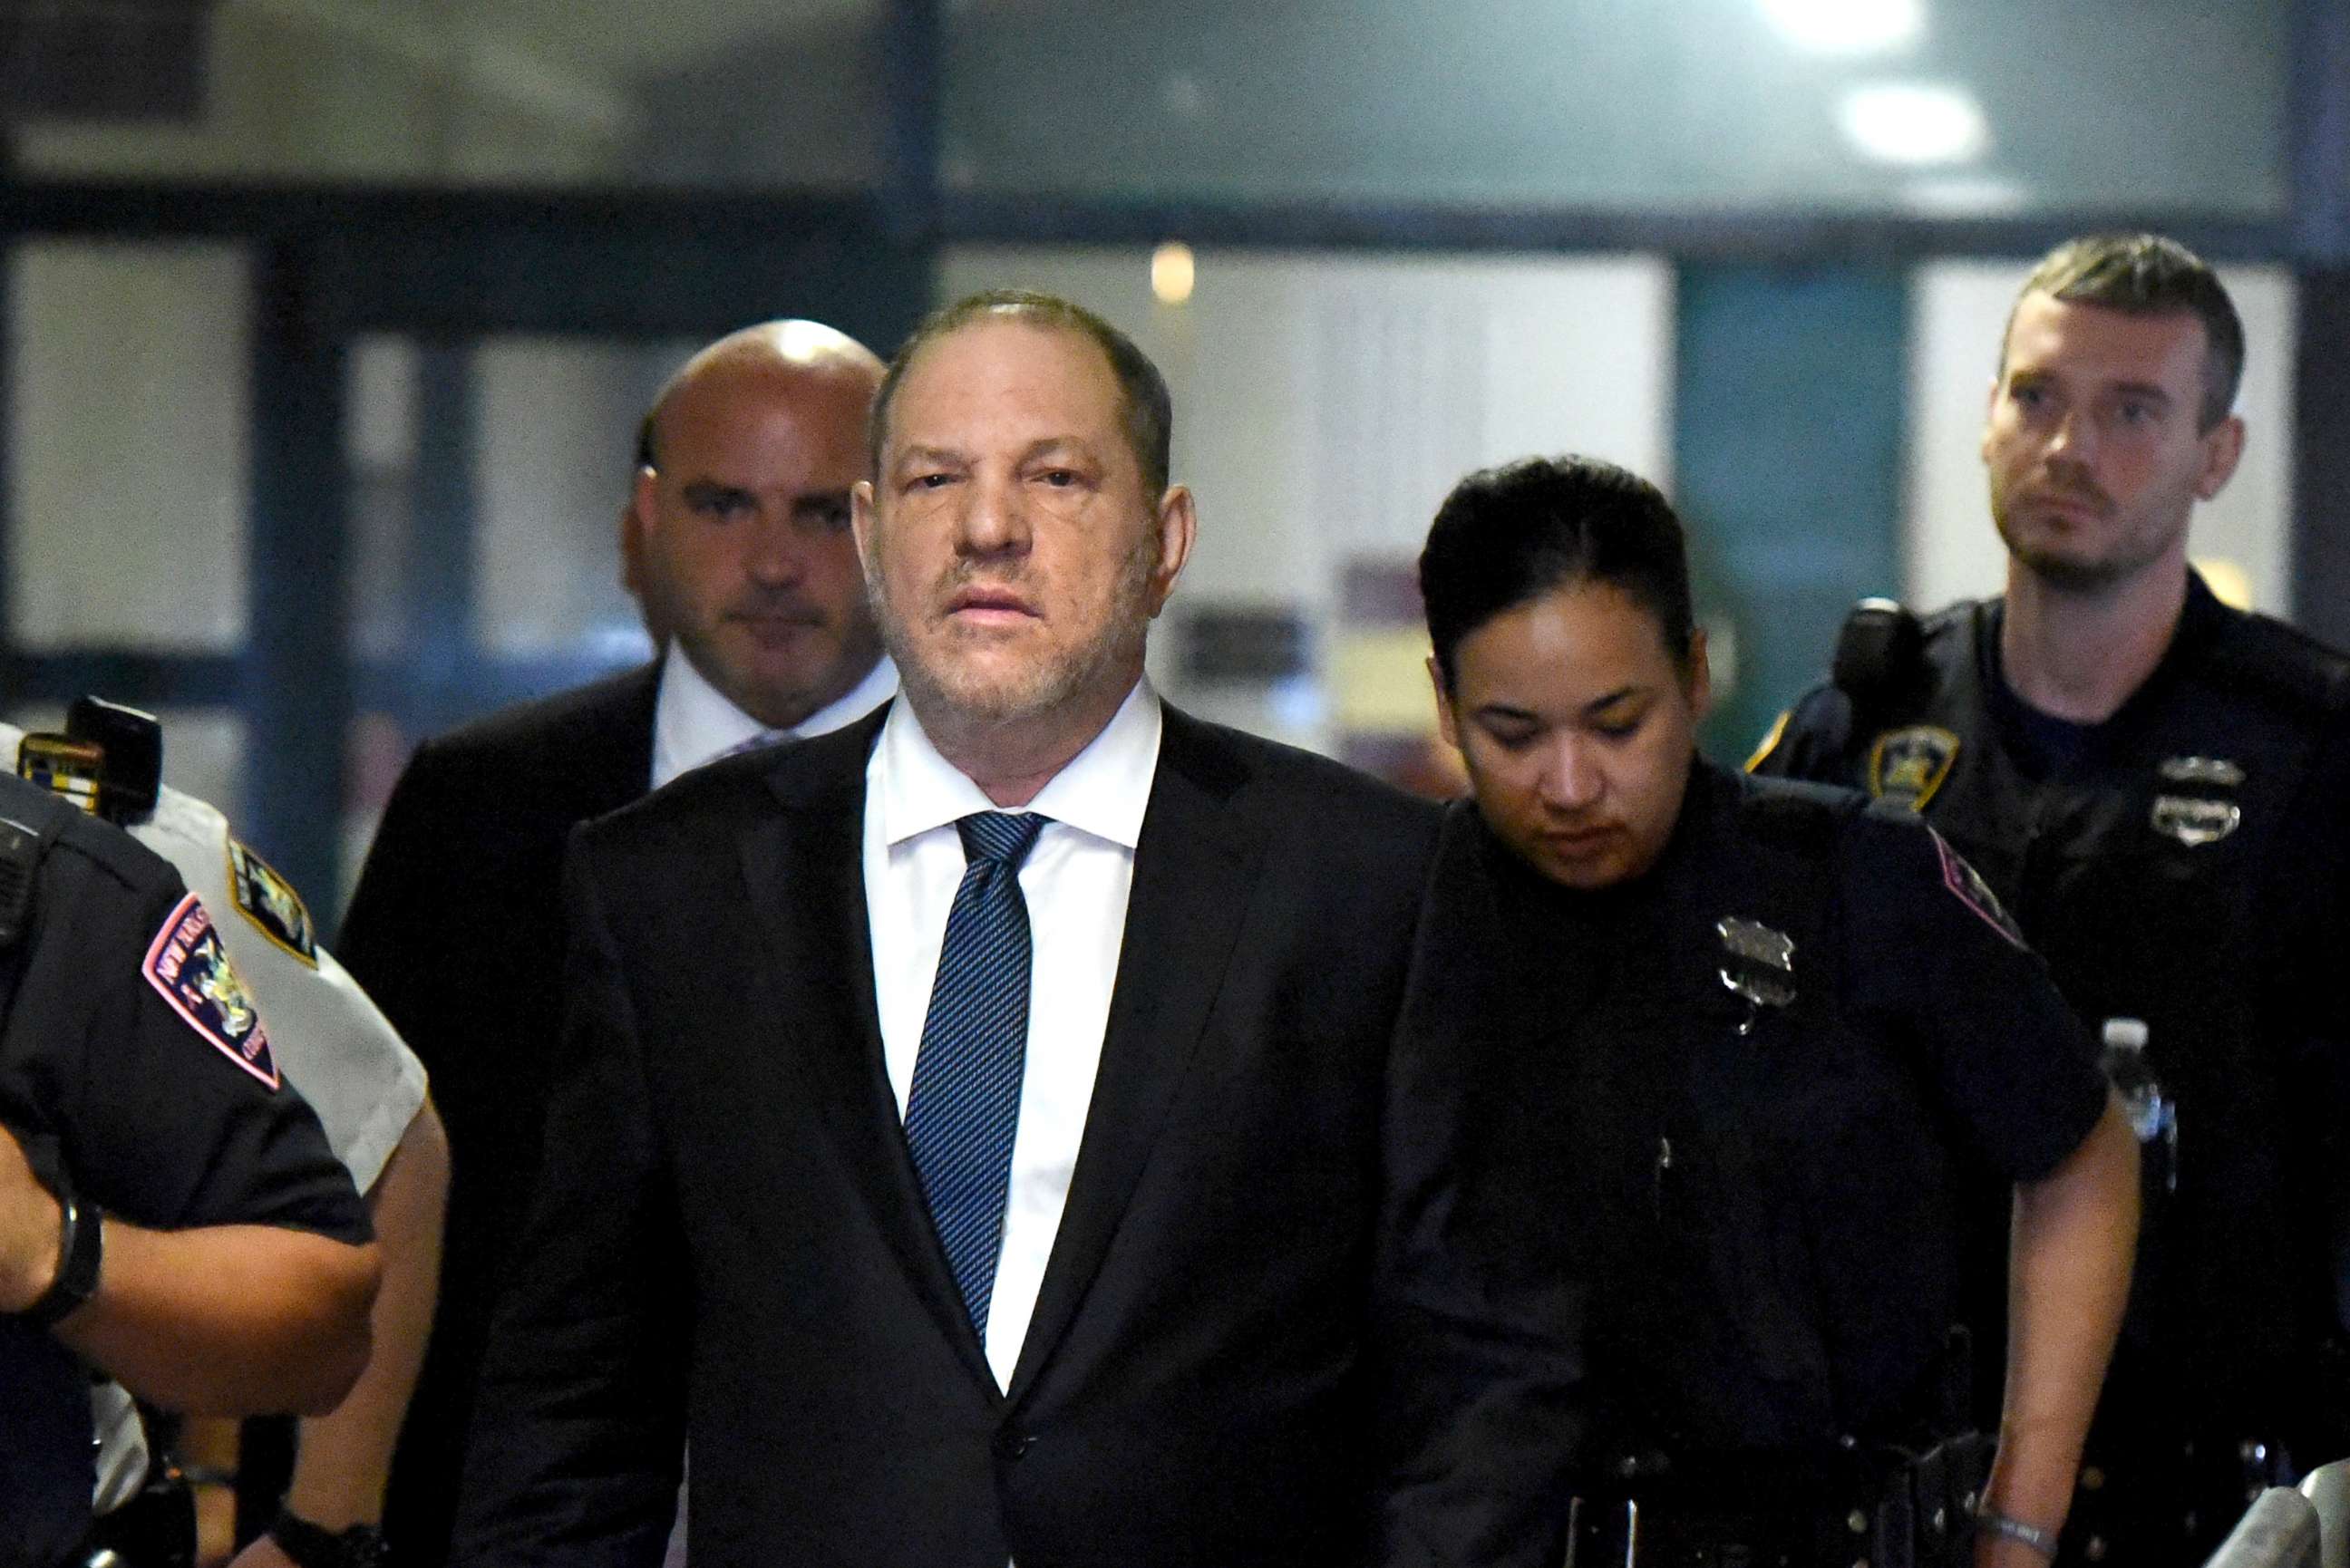 PHOTO: Harvey Weinstein arrives at New York State Supreme Court, Oct. 11, 2018, in New York City.